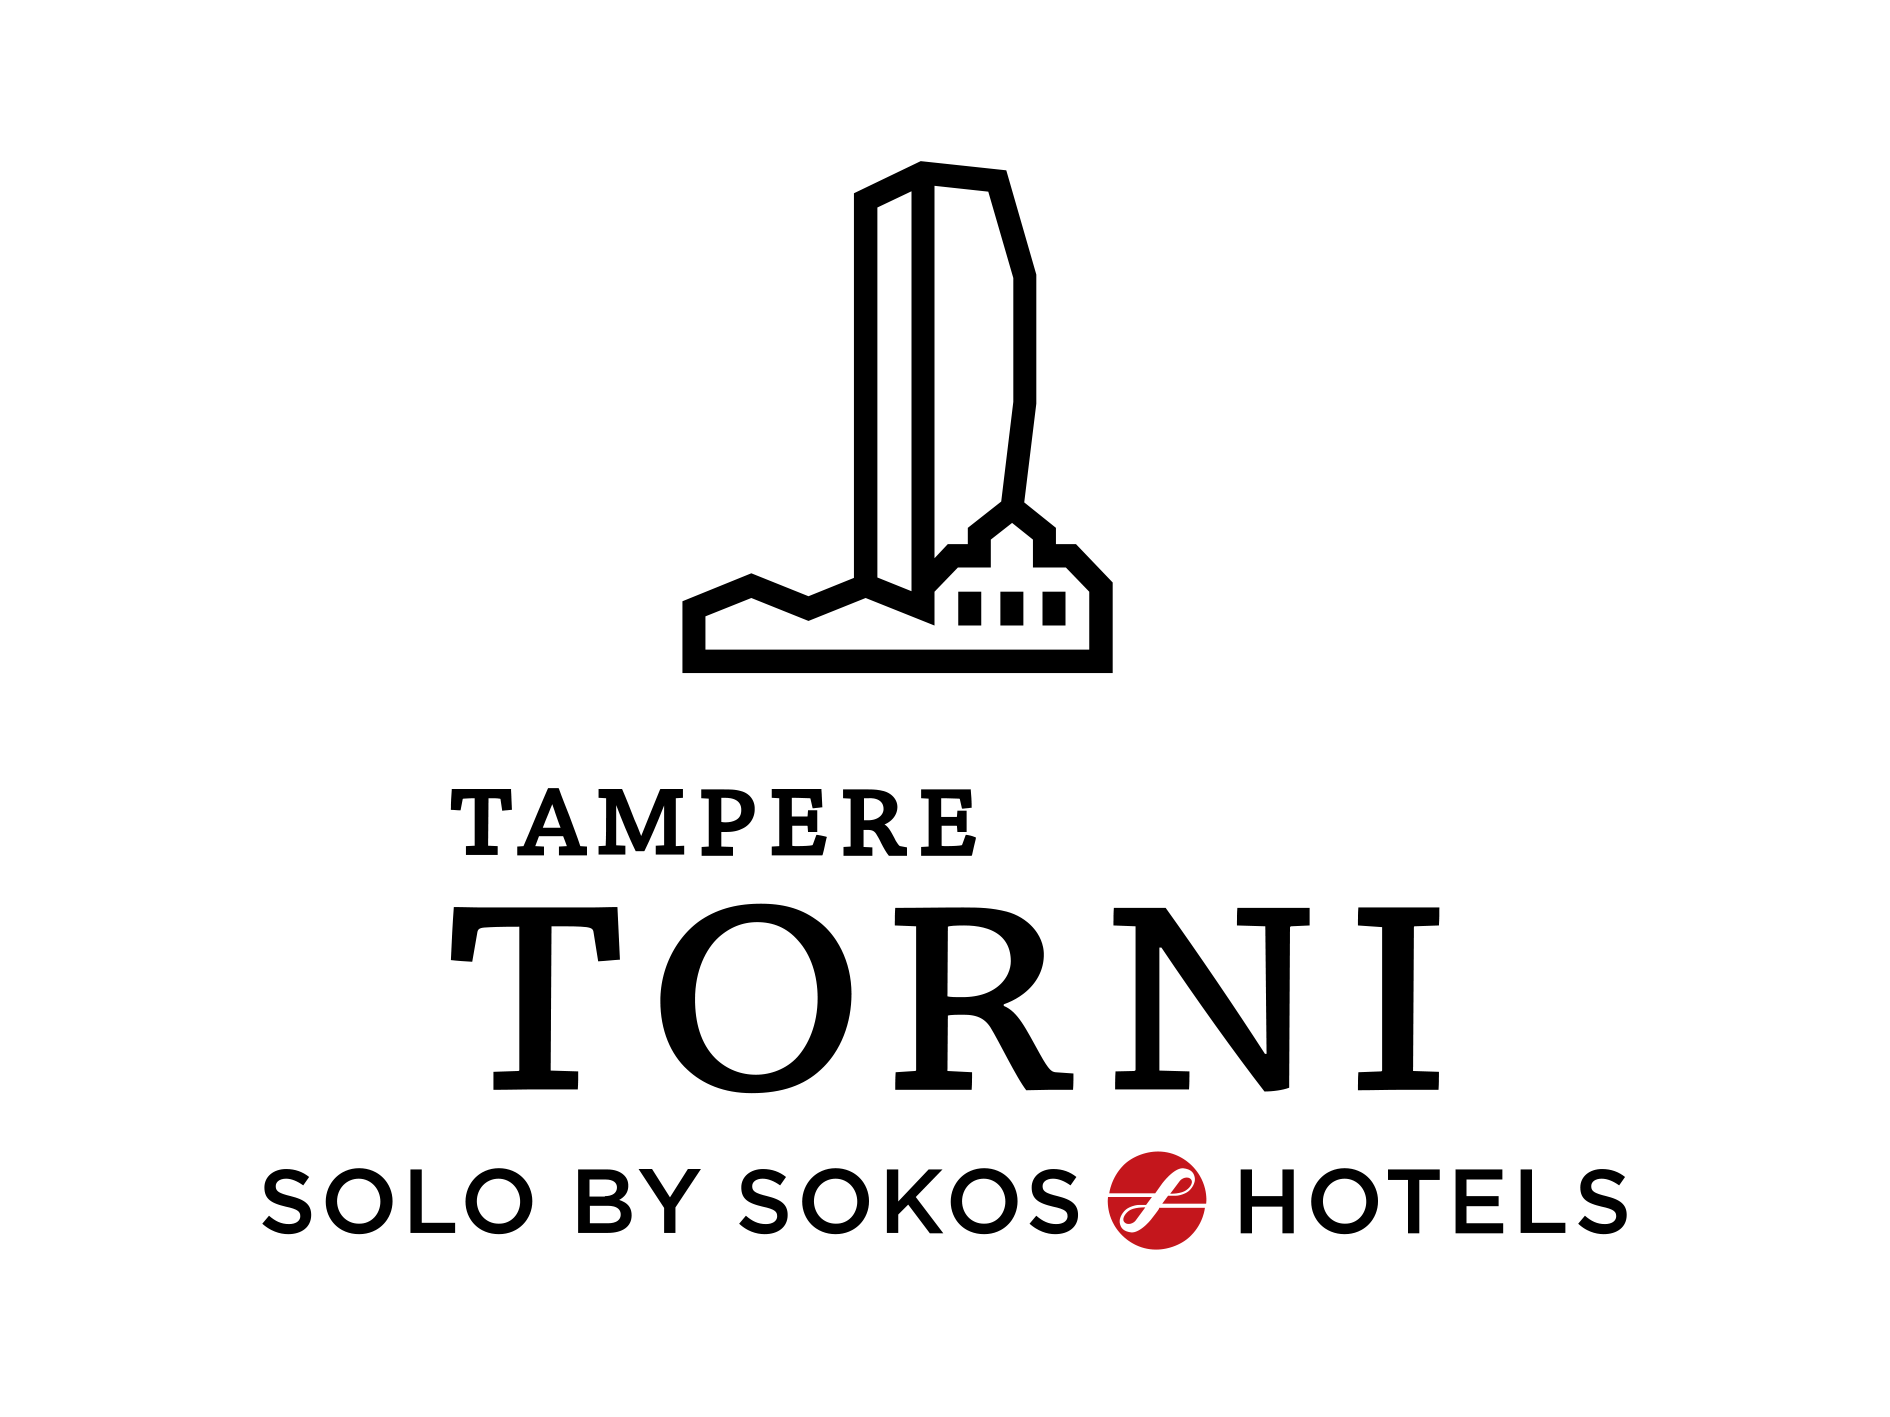 Tampere Torni Sokos Hotel